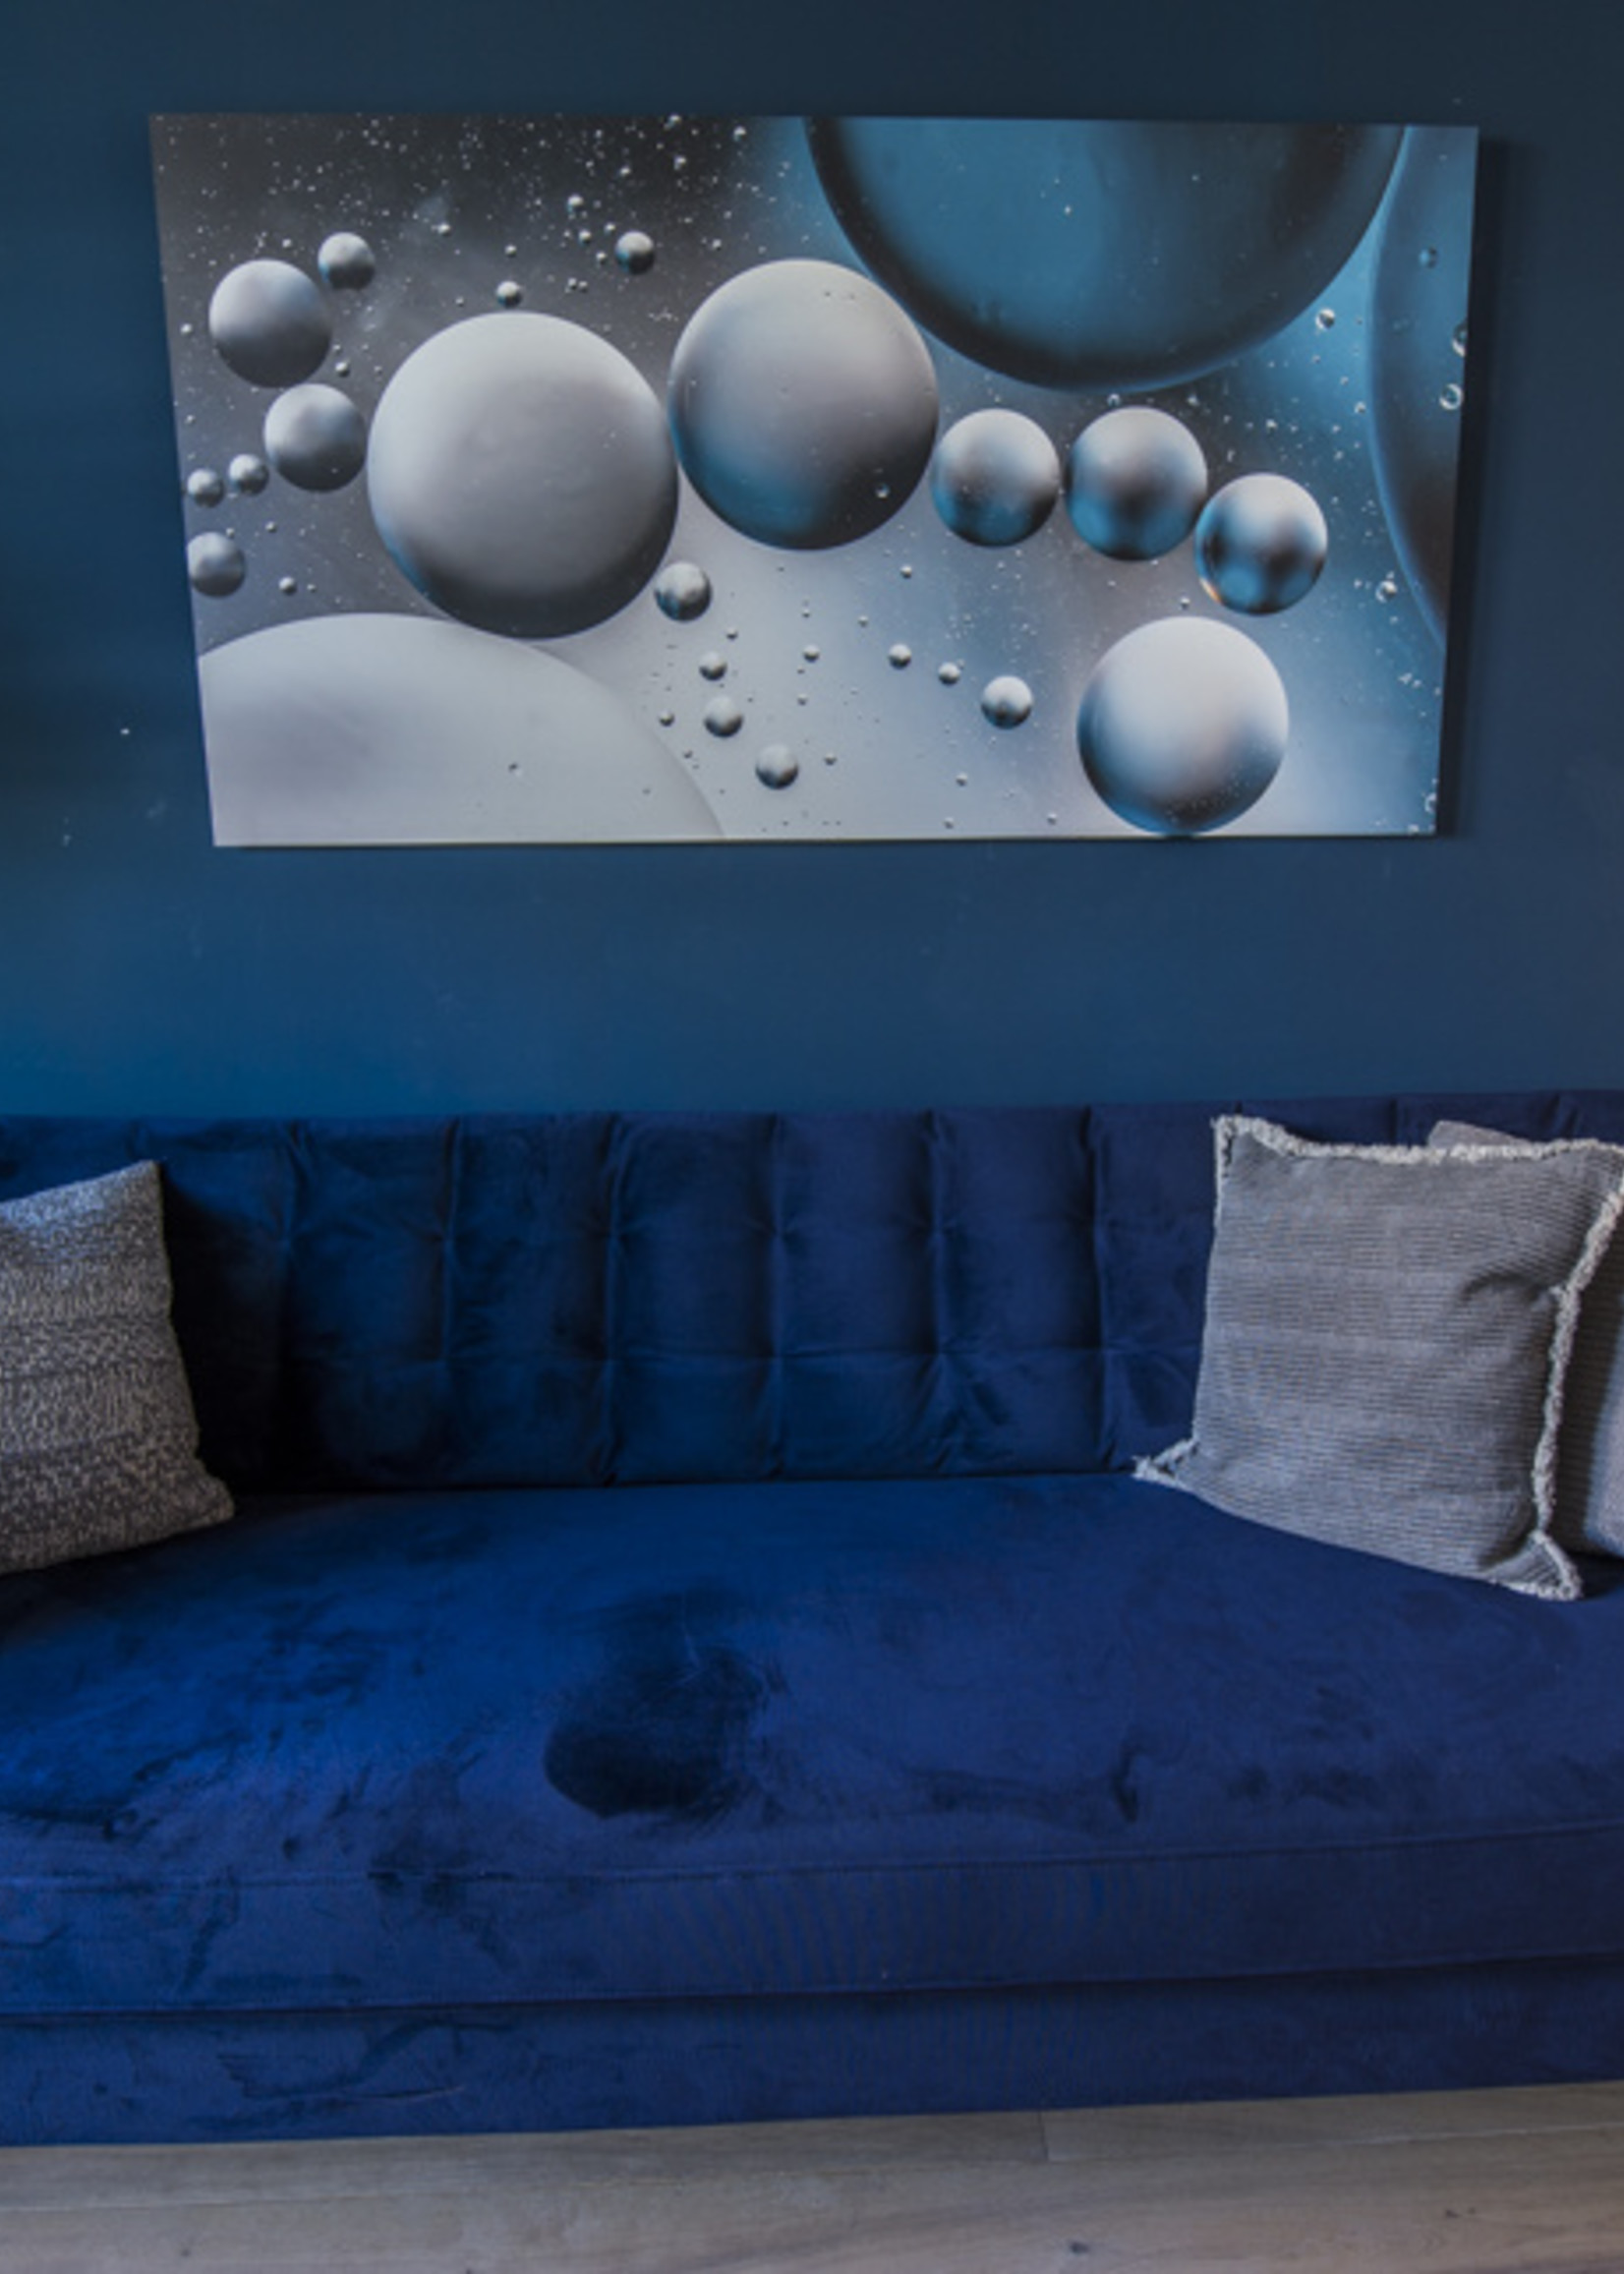 Frans van Steijn Wall photo "NY Blue York" Aluminum on Dibond 120 cm